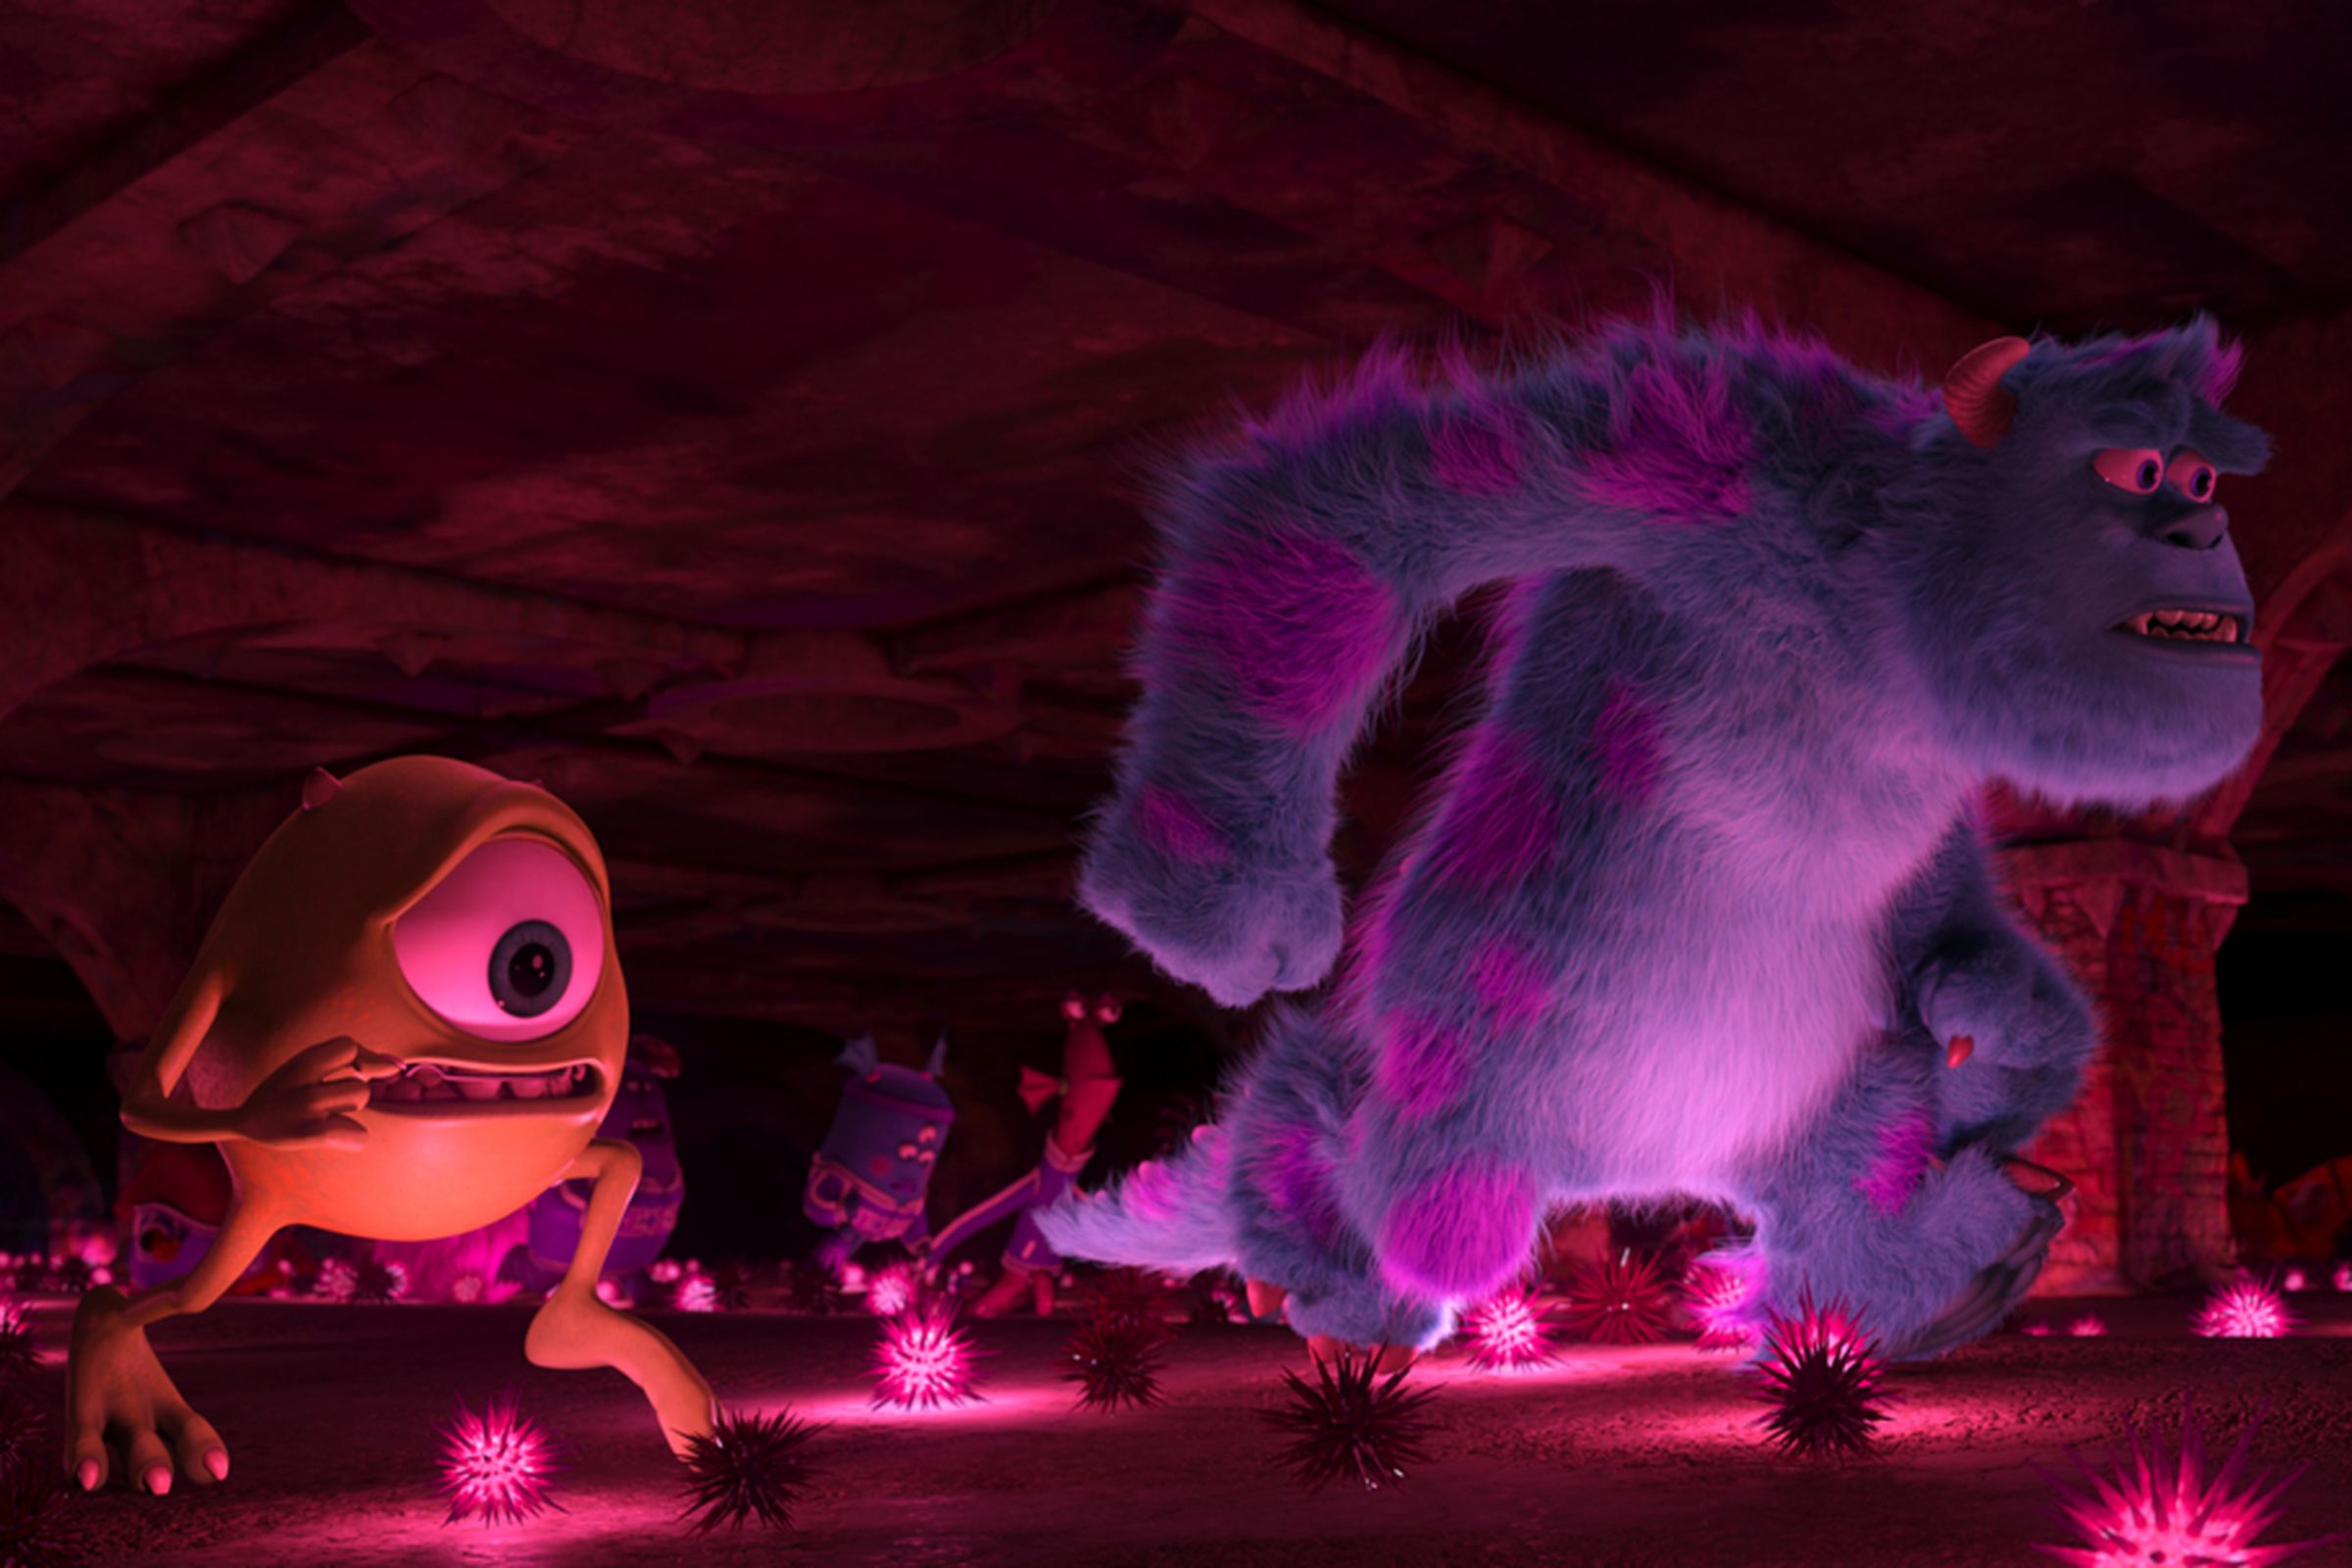 Pixar's Monsters University